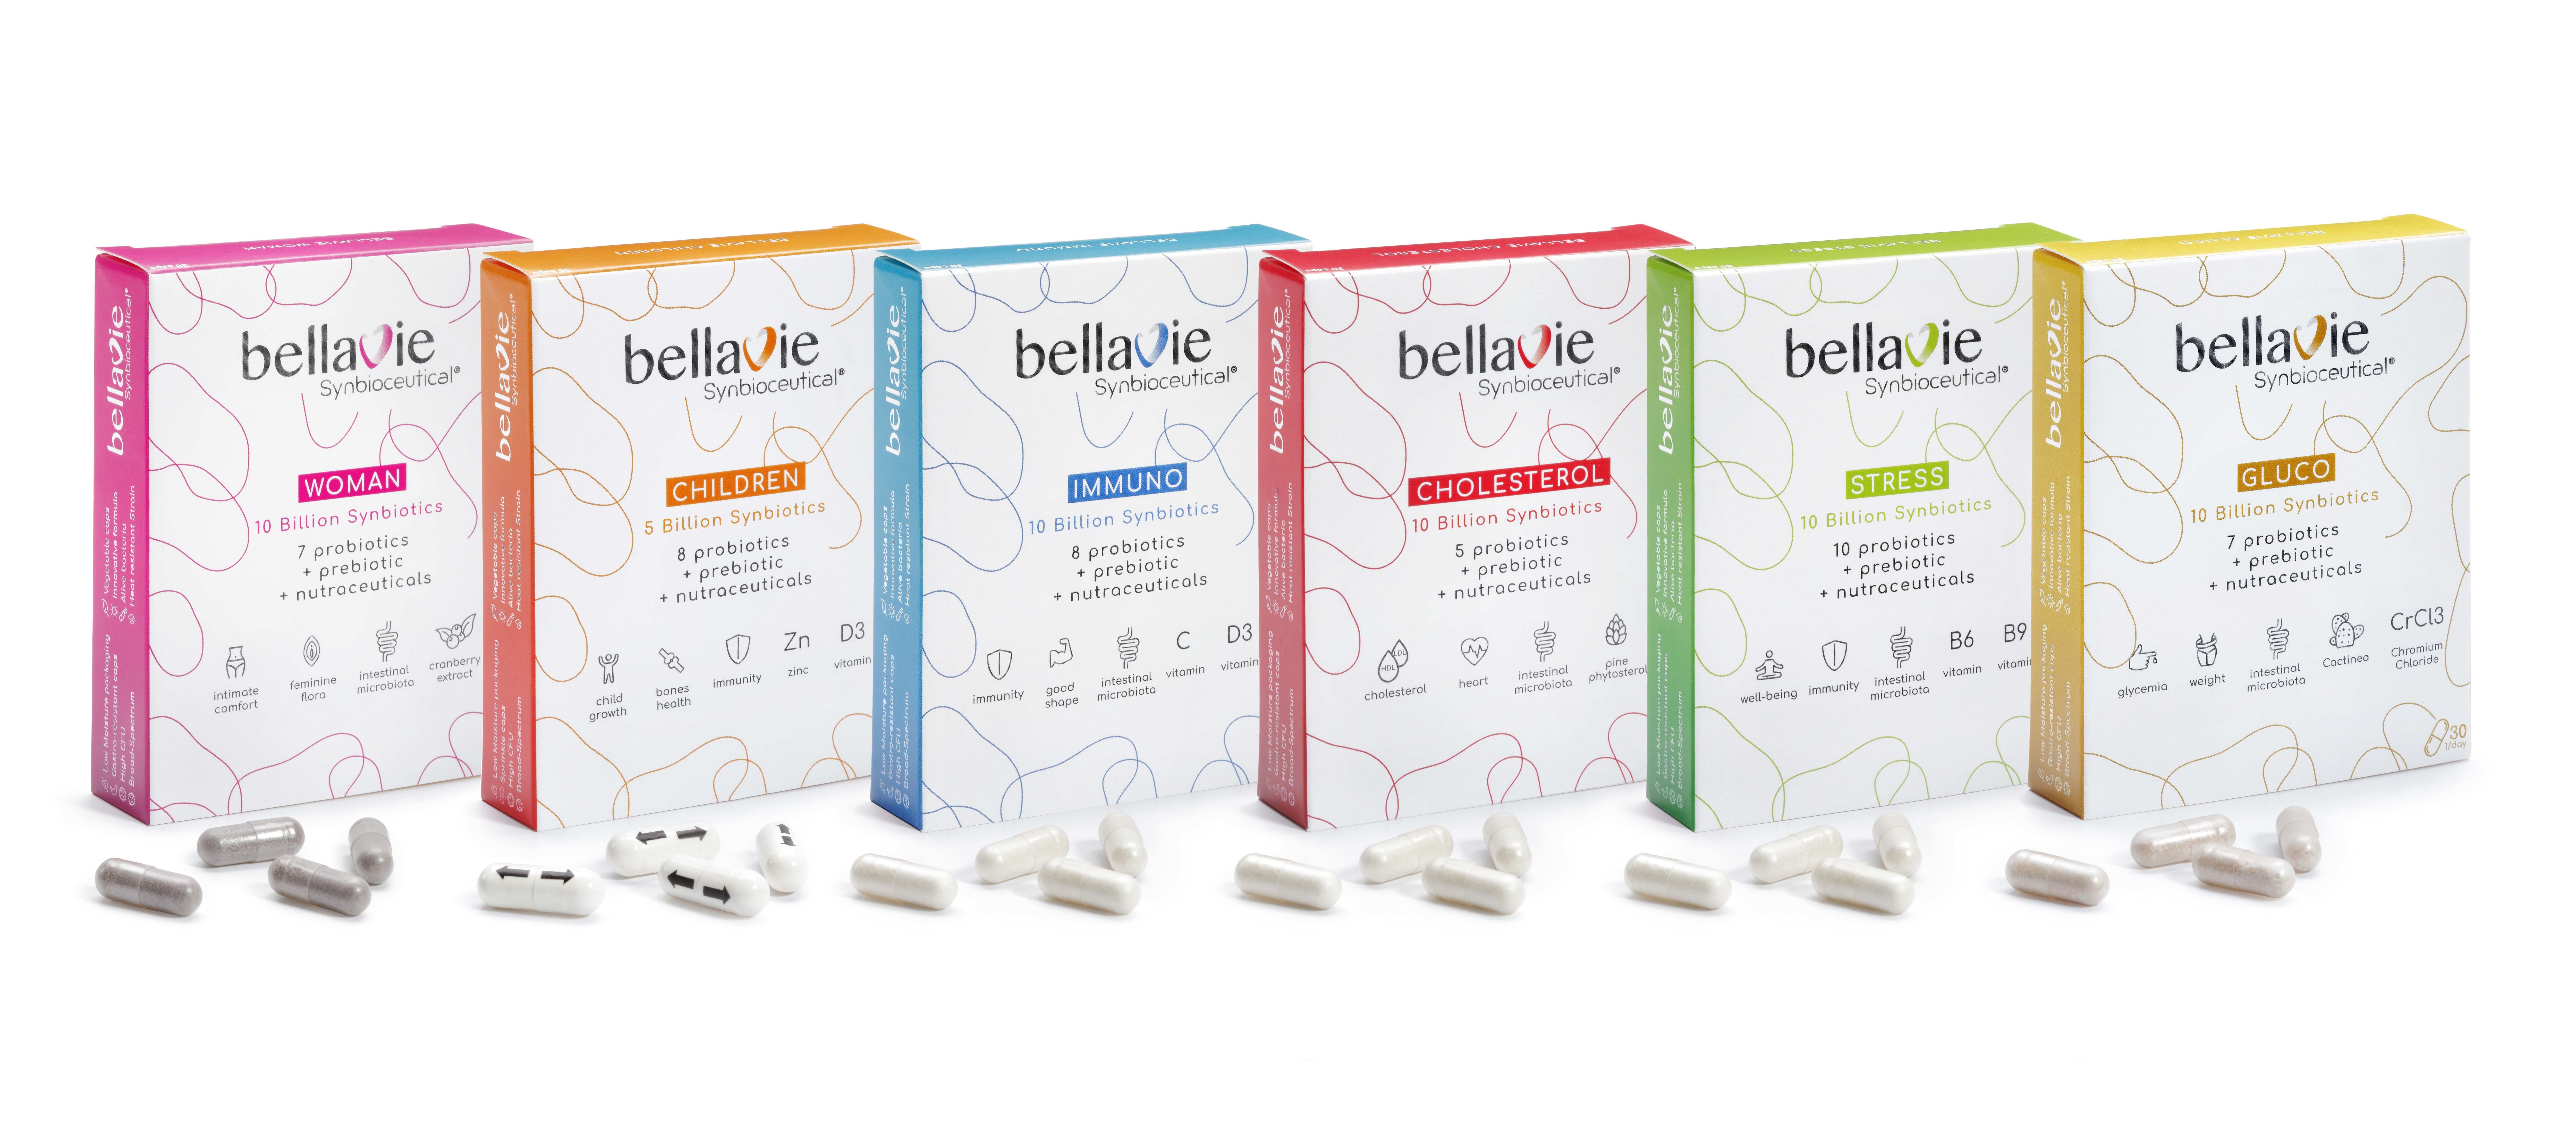 Bellavie for "good bacteries"